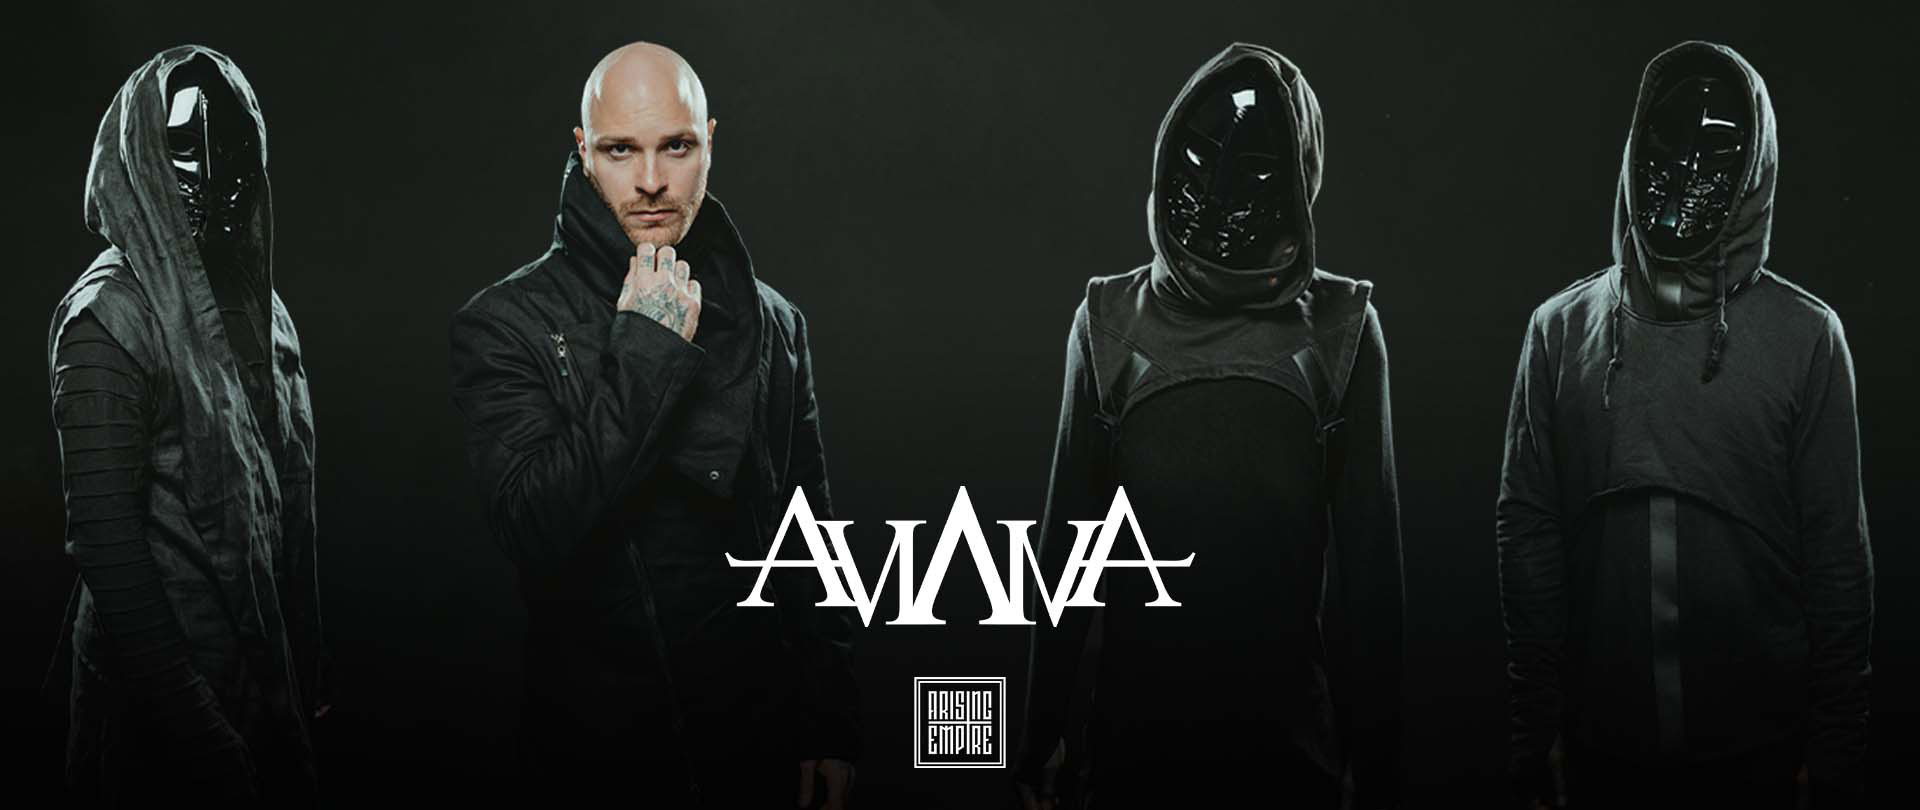 Aviana at Arising Empire • Official Online Shop / EN